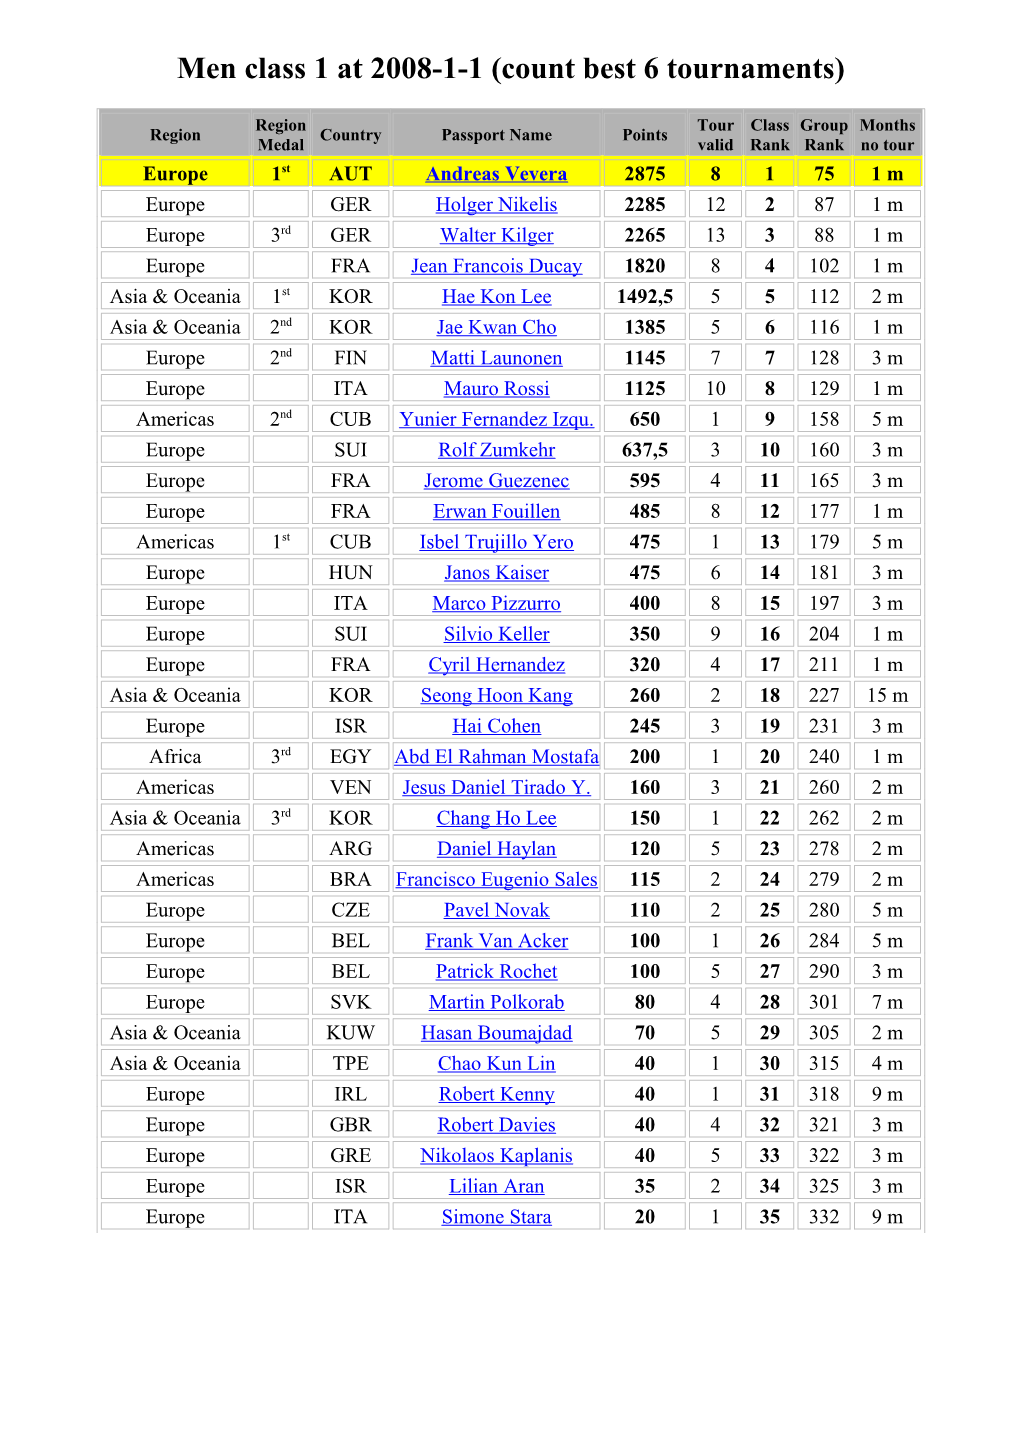 Men Class 1 at 2008-1-1 (Count Best 6 Tournaments)